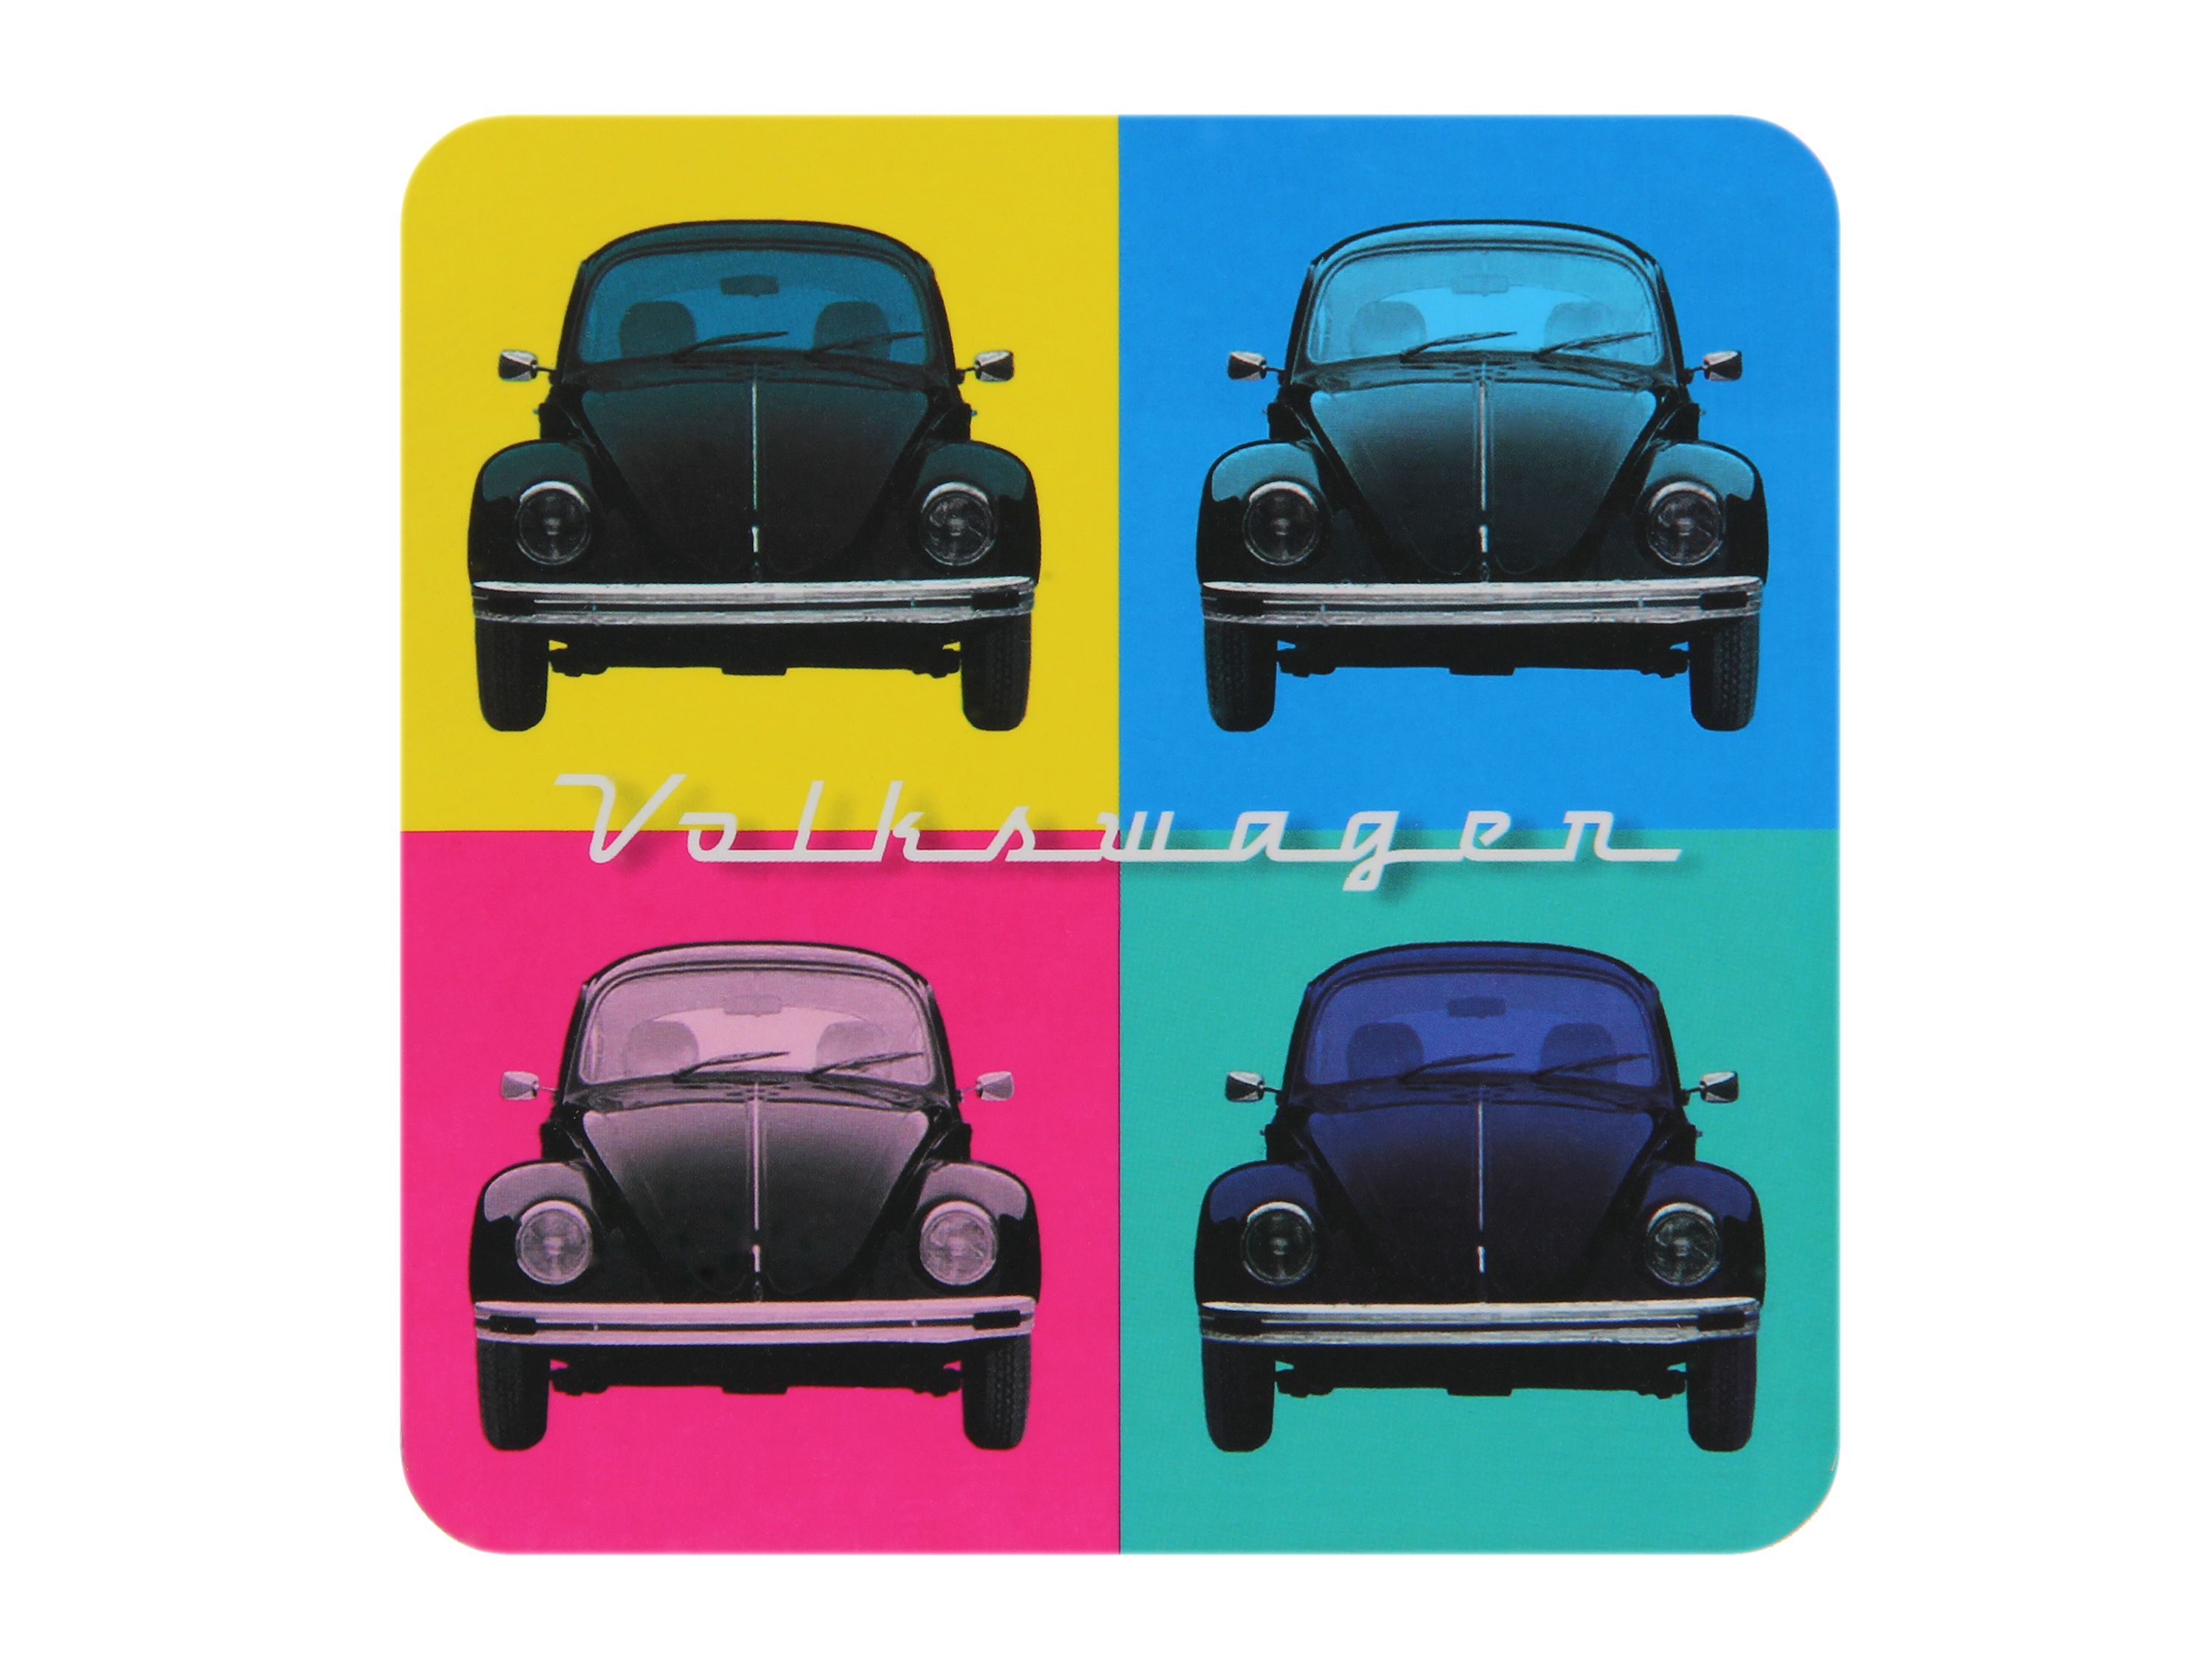 VW Käfer Untersetzer 4er Set im Pappschuber - Multicolor